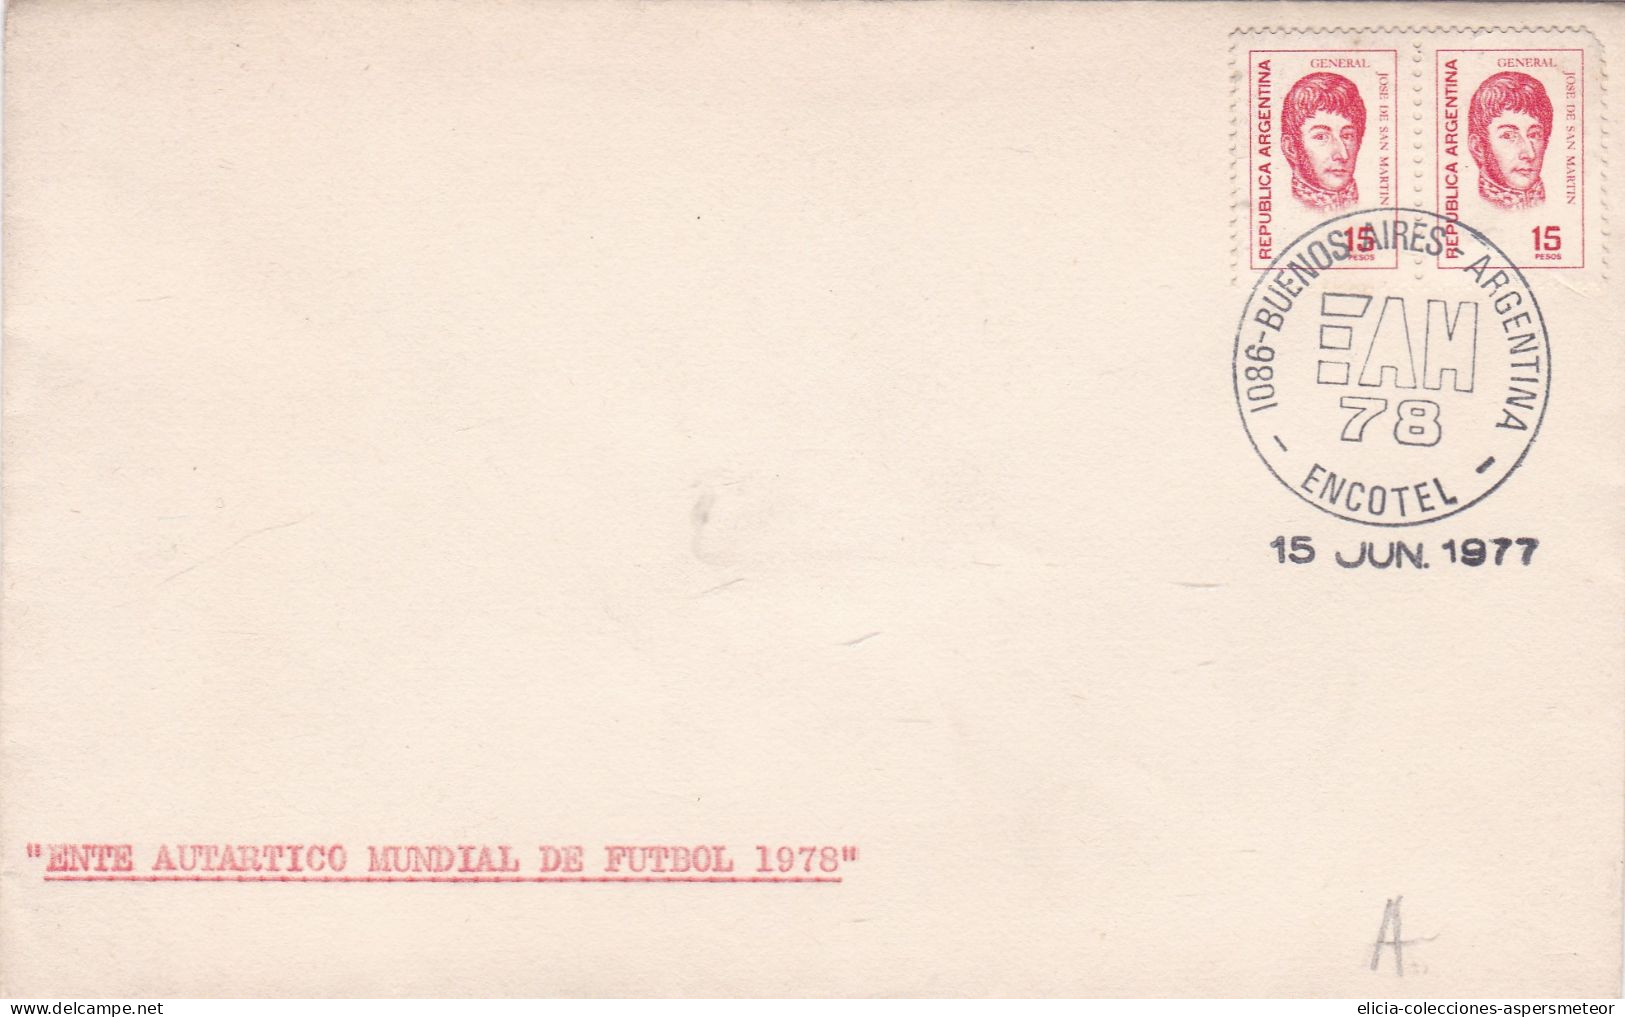 Argentina - 1978 - FDC - World Football Autonomous Entity 1978 Envelope - San Martin Stamp - ENCOTEL Postmark - Caja 30 - FDC